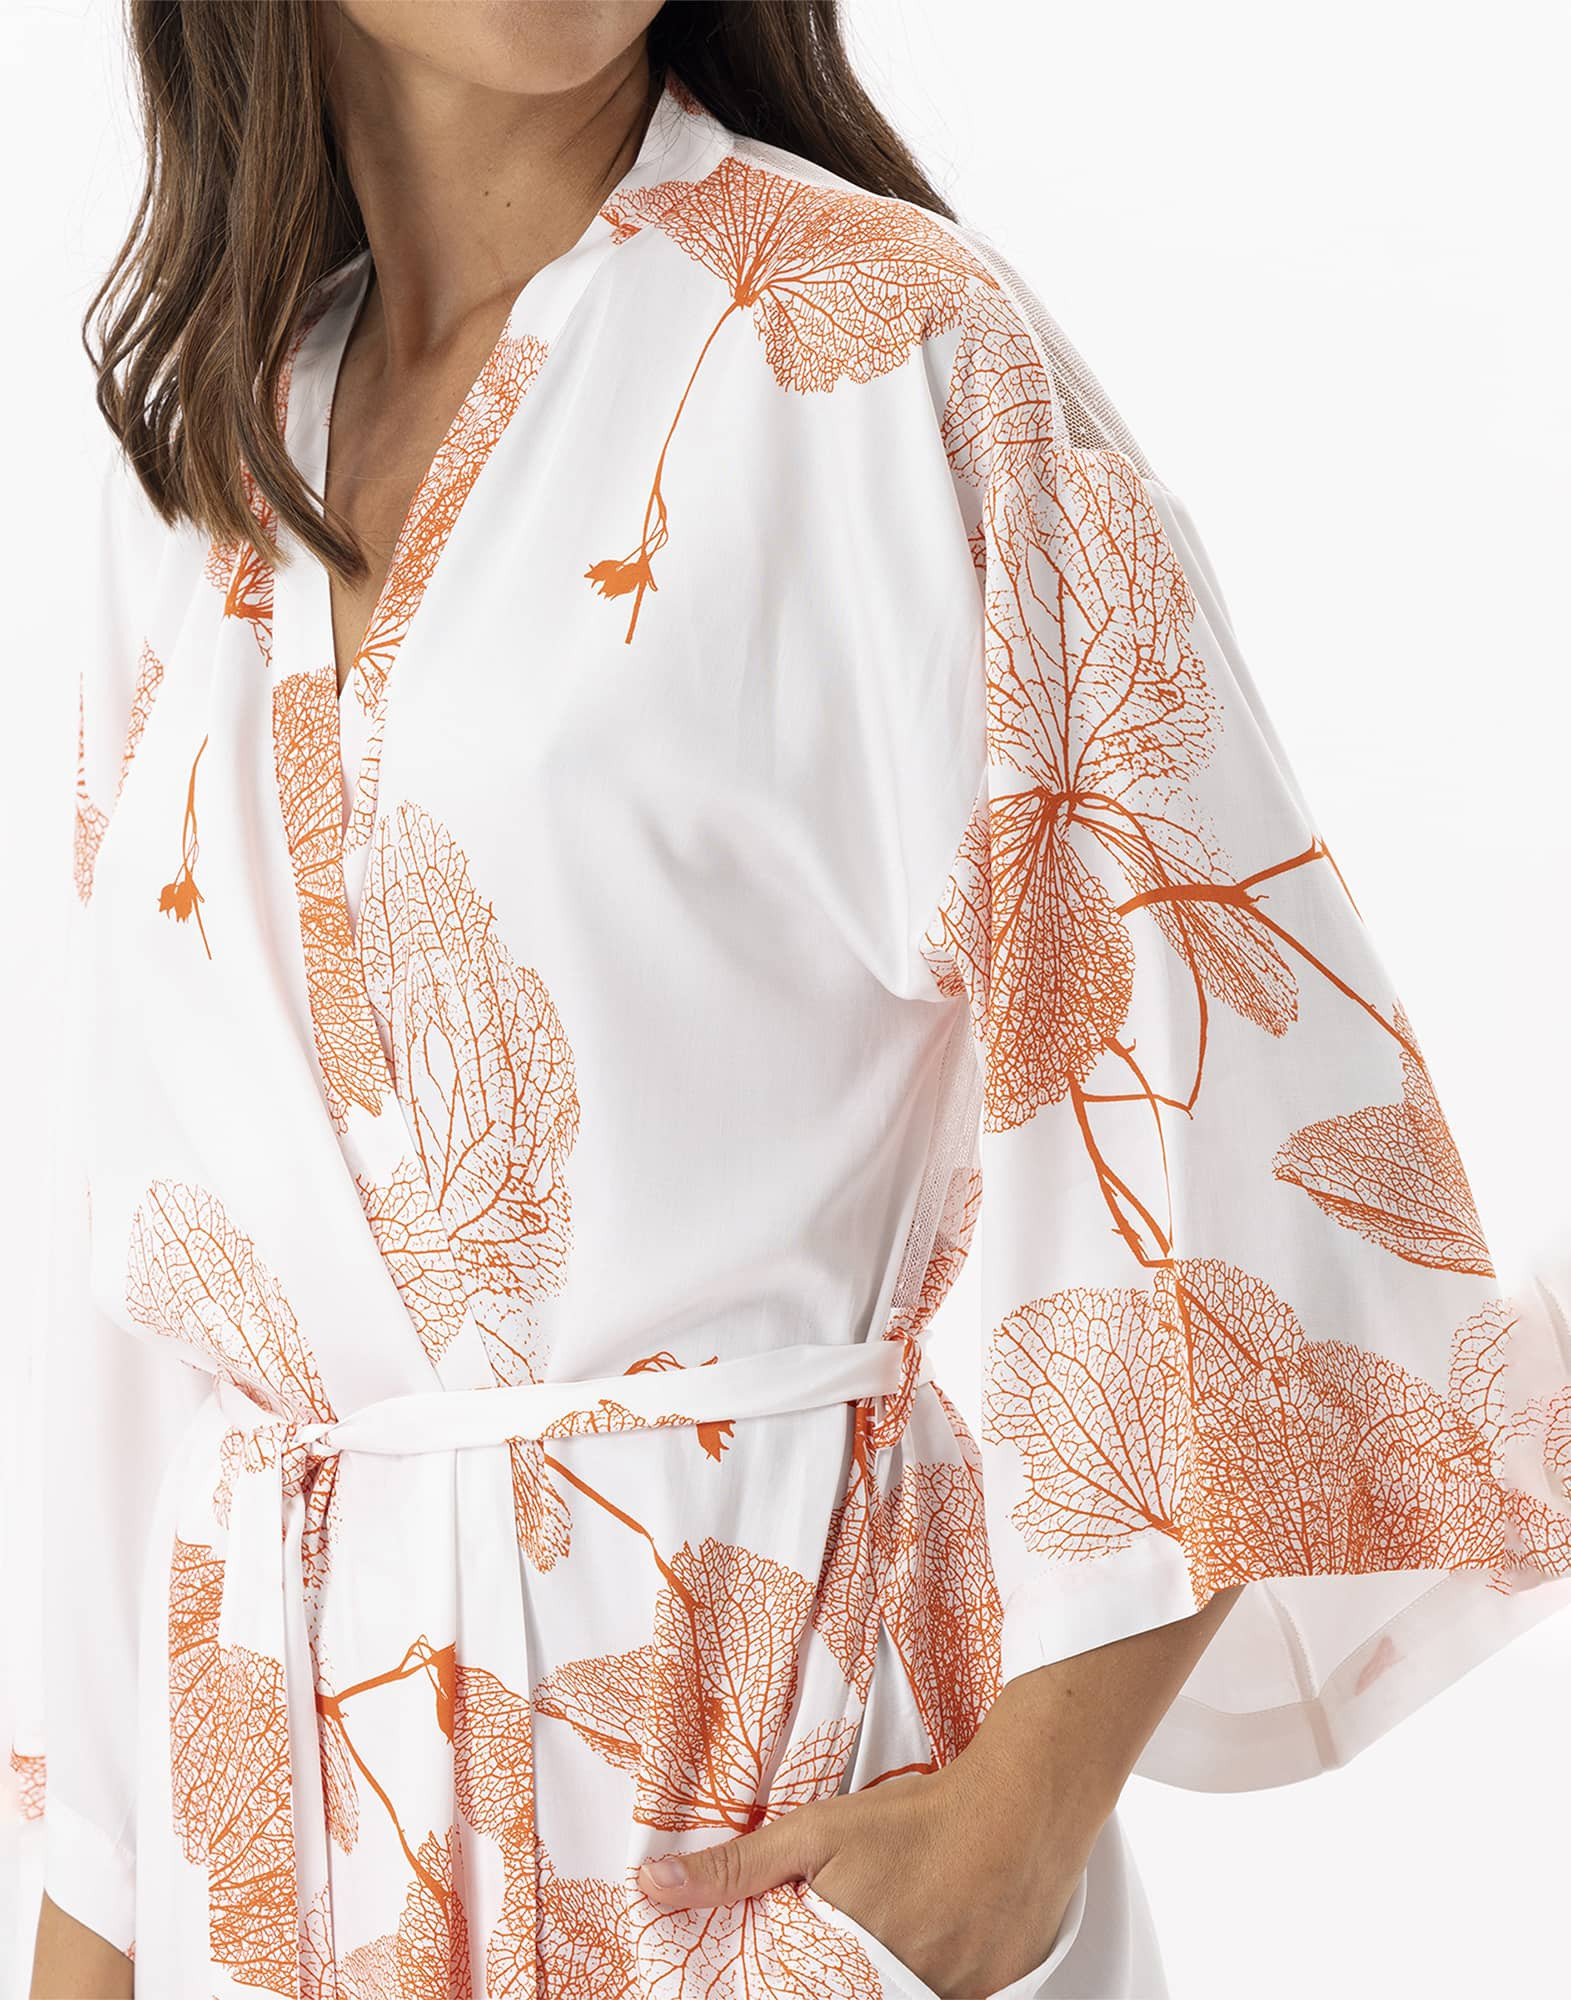 Kimono with plant pattern in 100% viscose GINKGO 760 tangerine